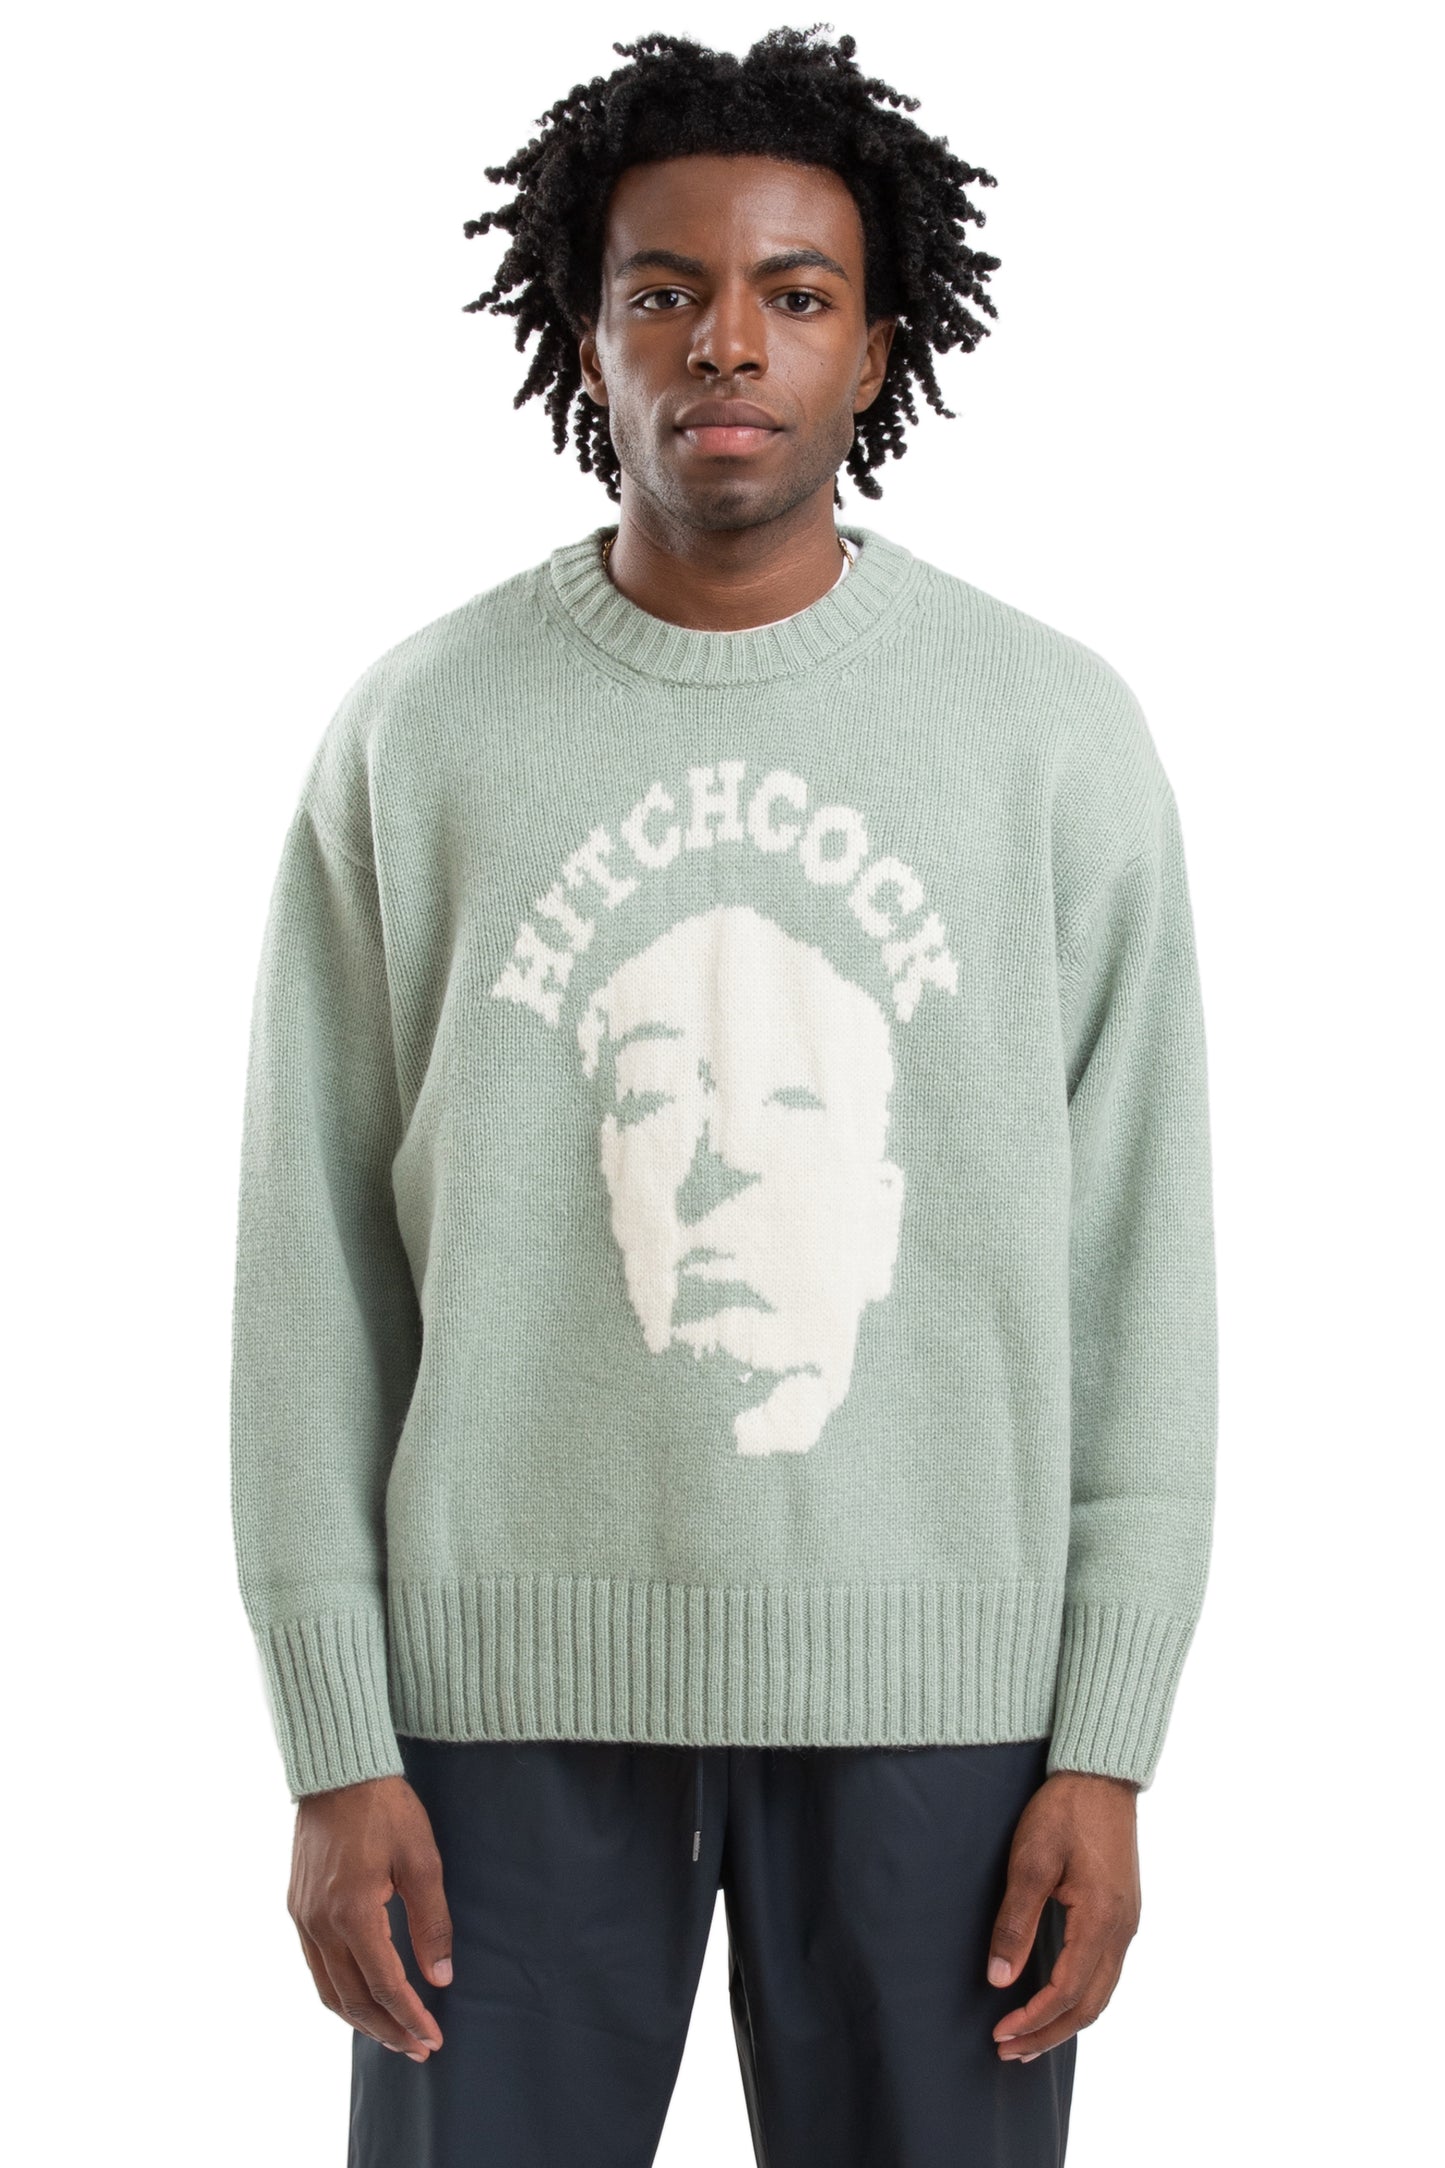 Hitchcock Sweater